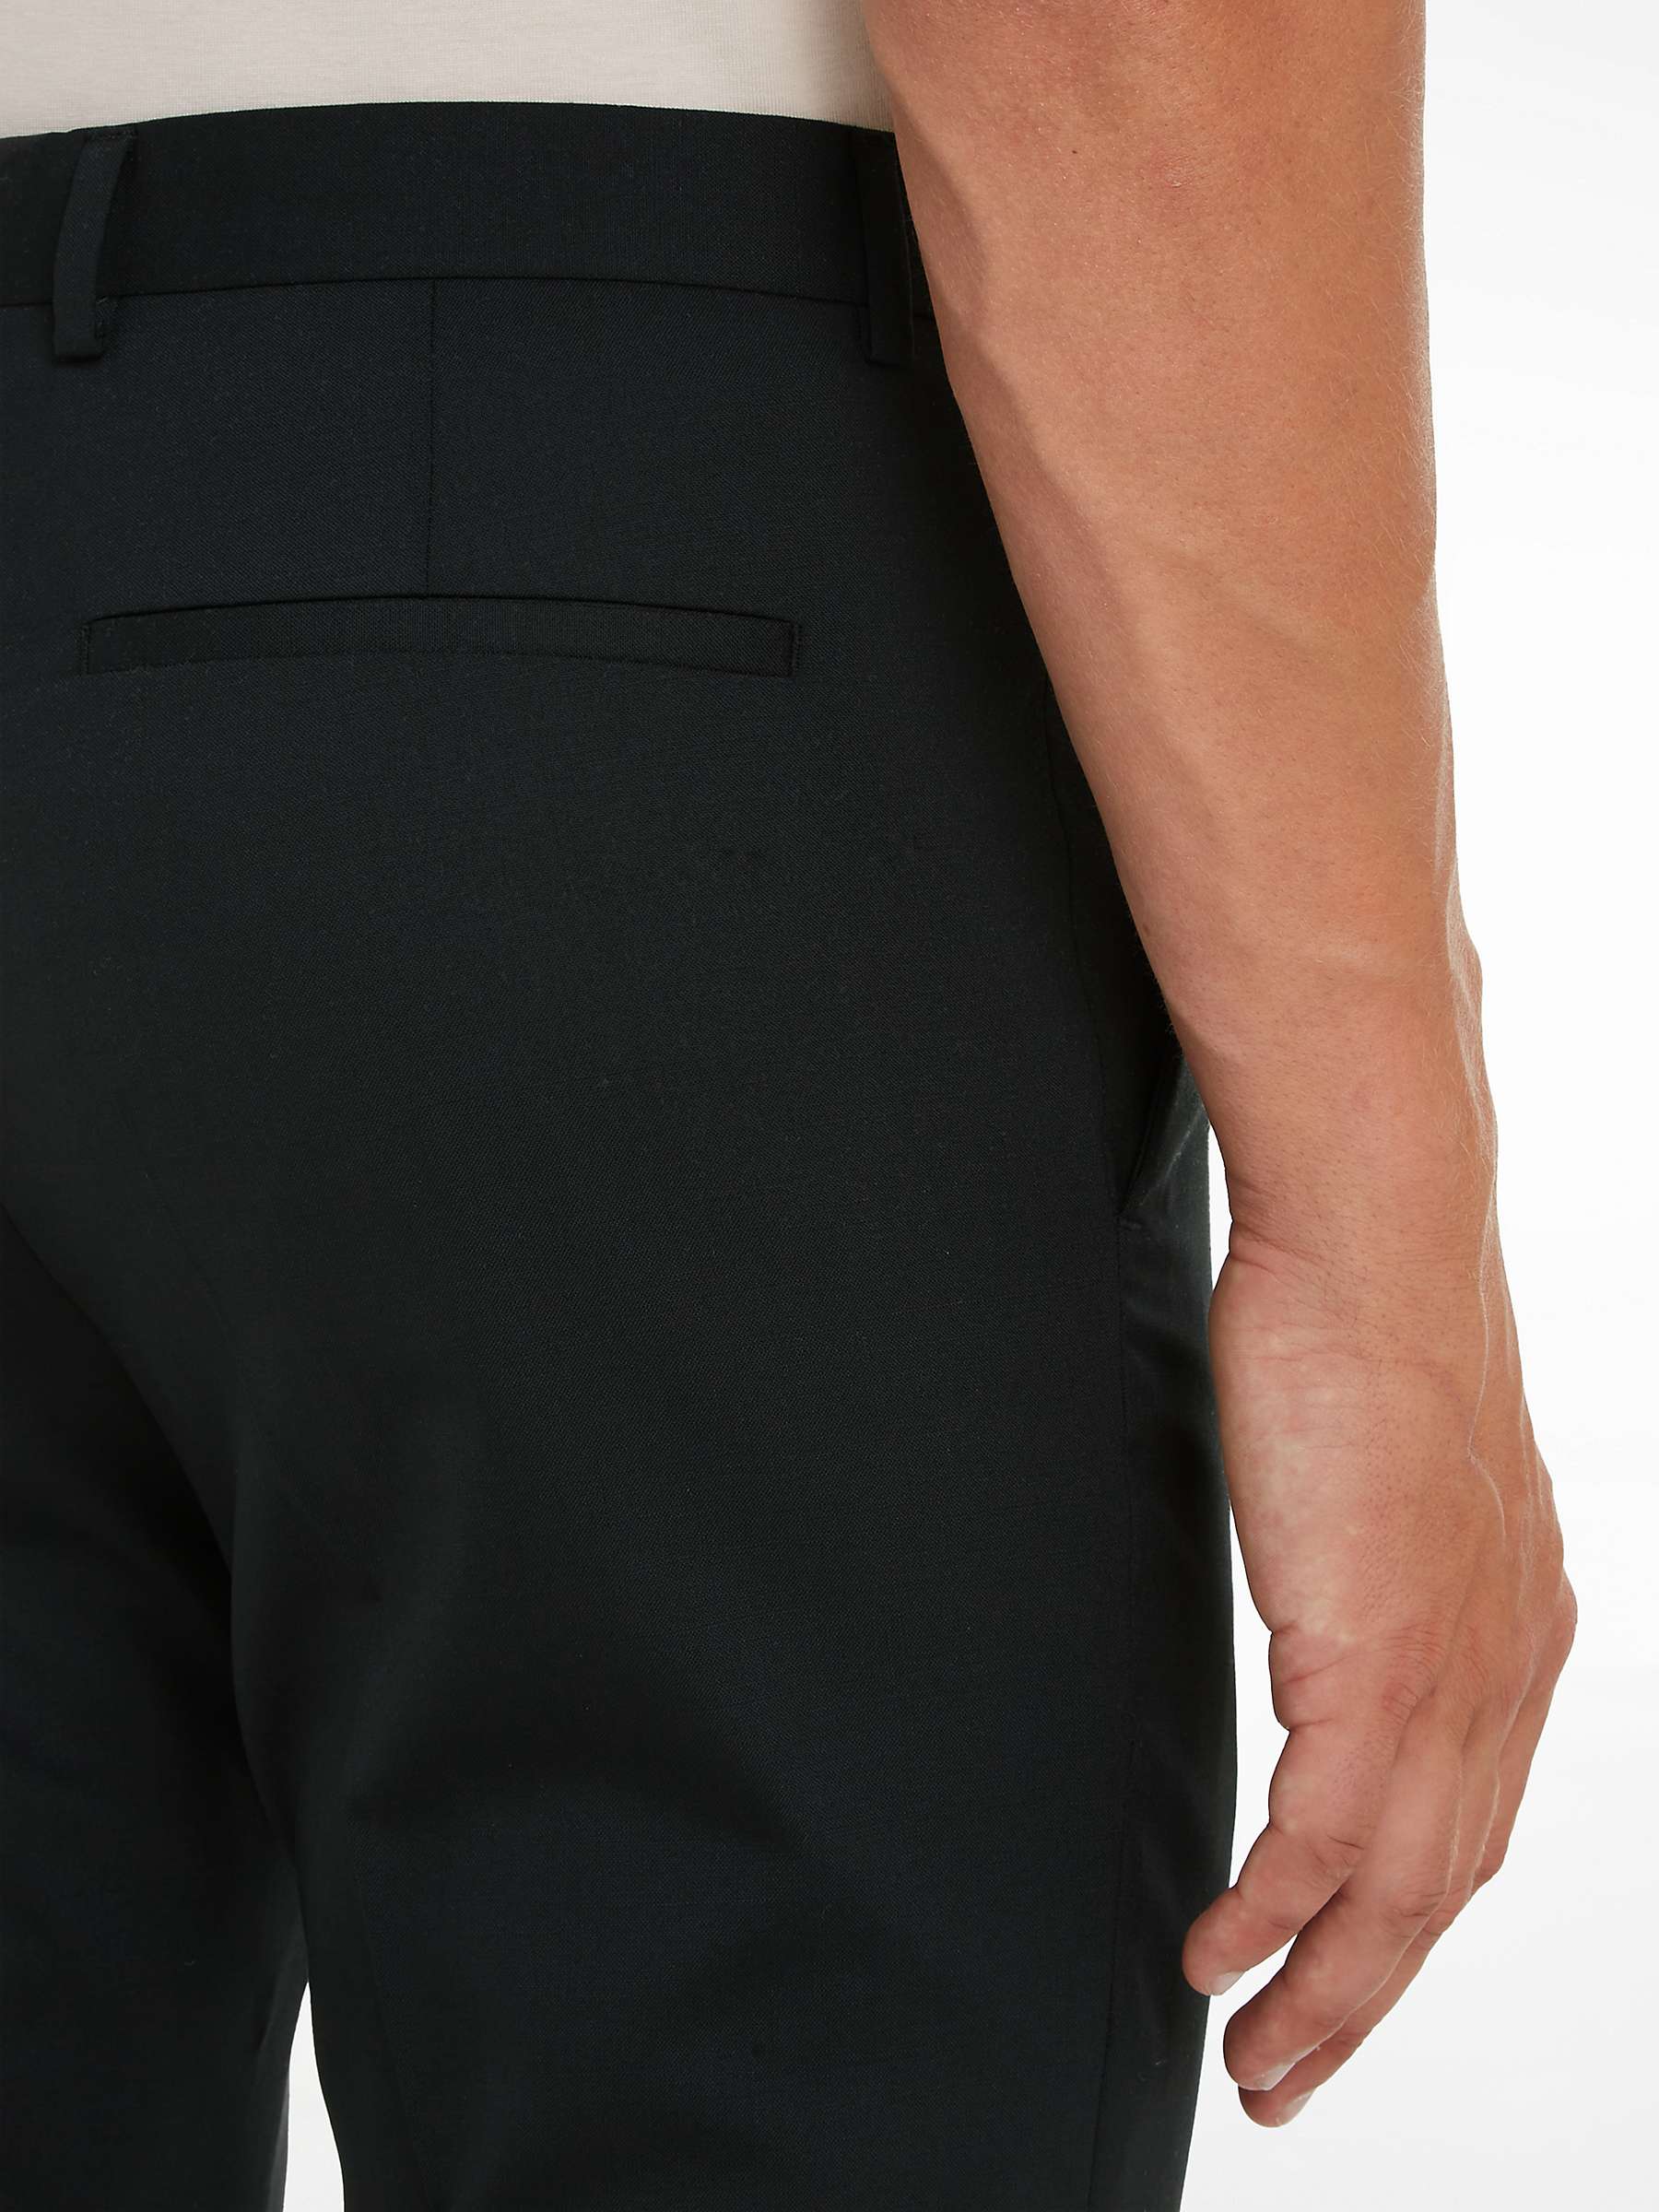 Buy Calvin Klein Slim Wool Stretch Suit Trousers Online at johnlewis.com